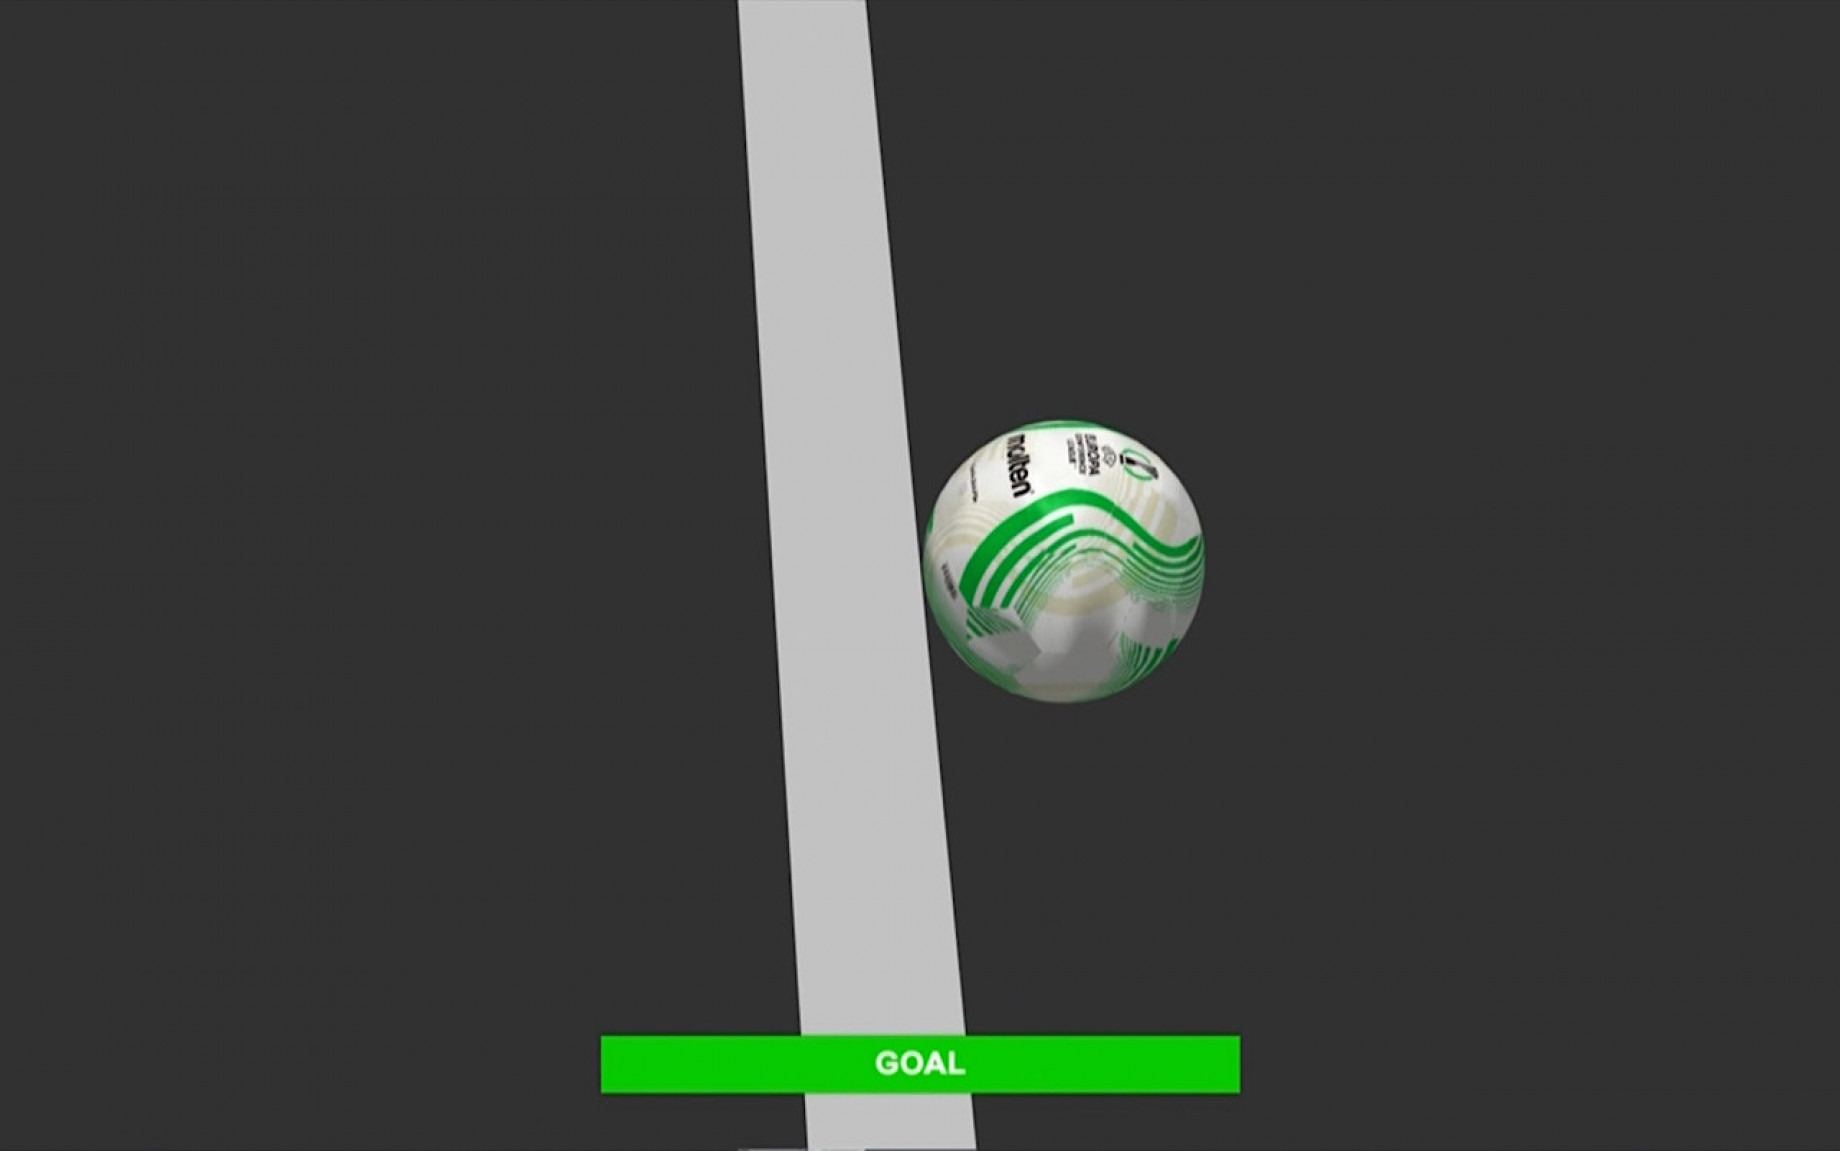 cabral-fiorentina-goal-line-technology-2-gpo.jpg